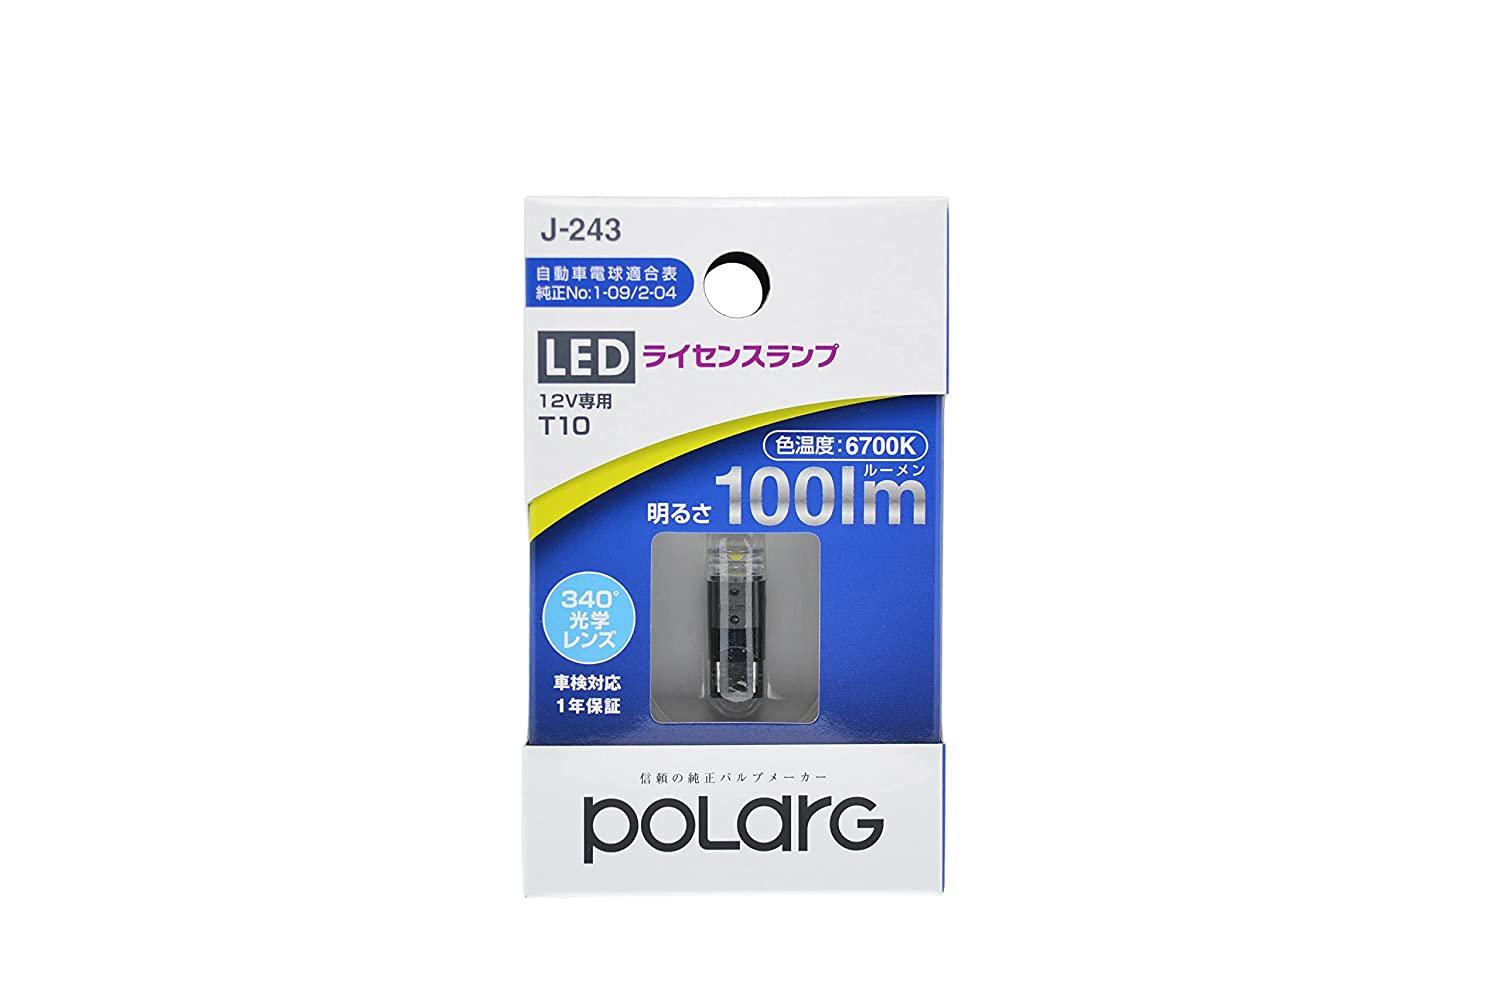 POLARG H LED 340wY |WV [ CZX T10 6700K 100lm 12V zCg { P2963W J-243